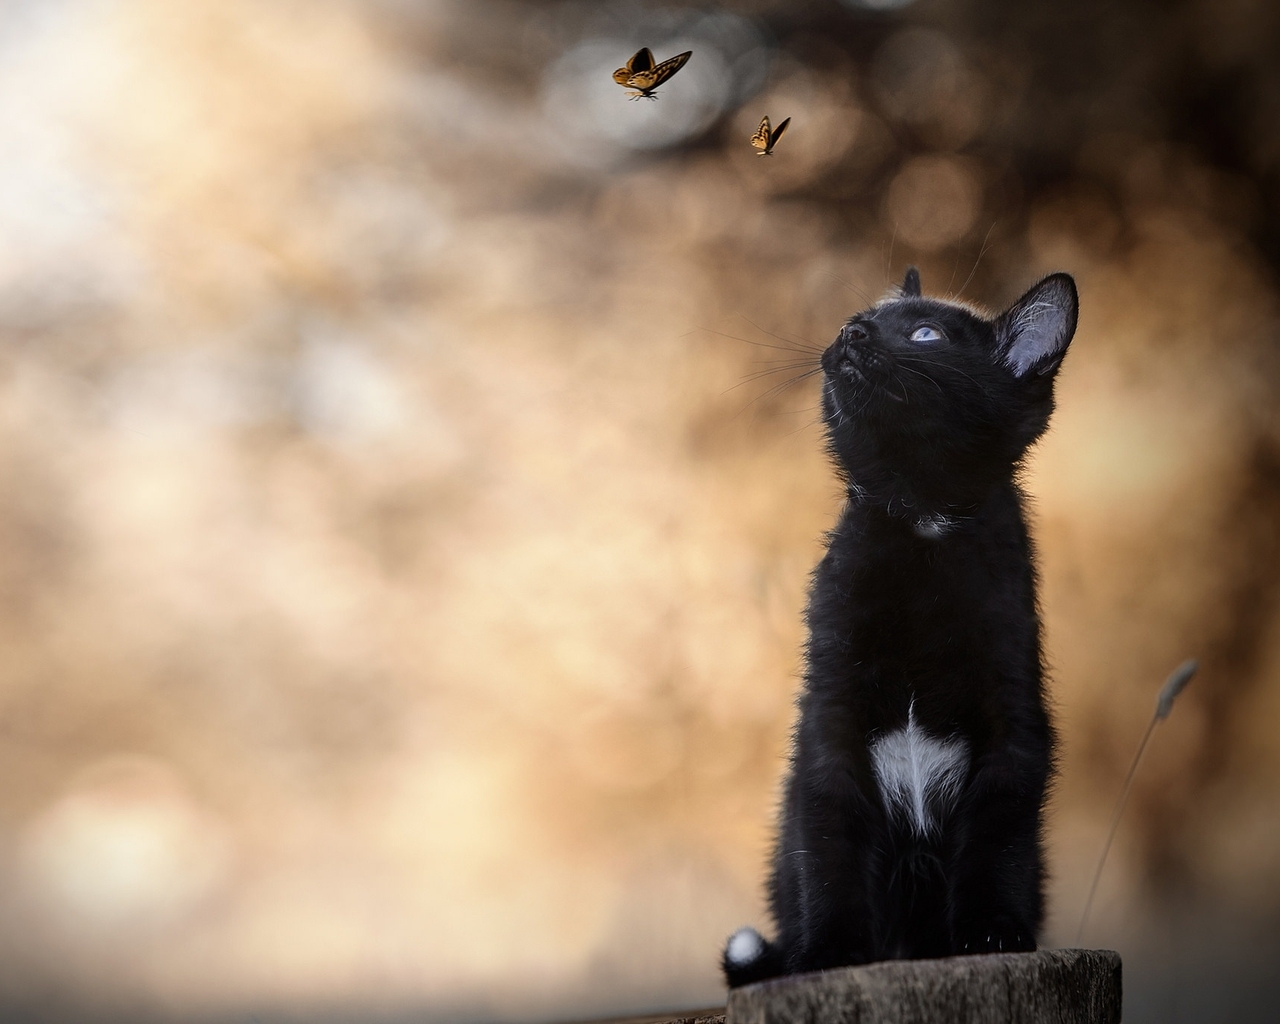 Image: Kitten, cat, black, white spot, stump, sitting, butterfly, bokeh, blur